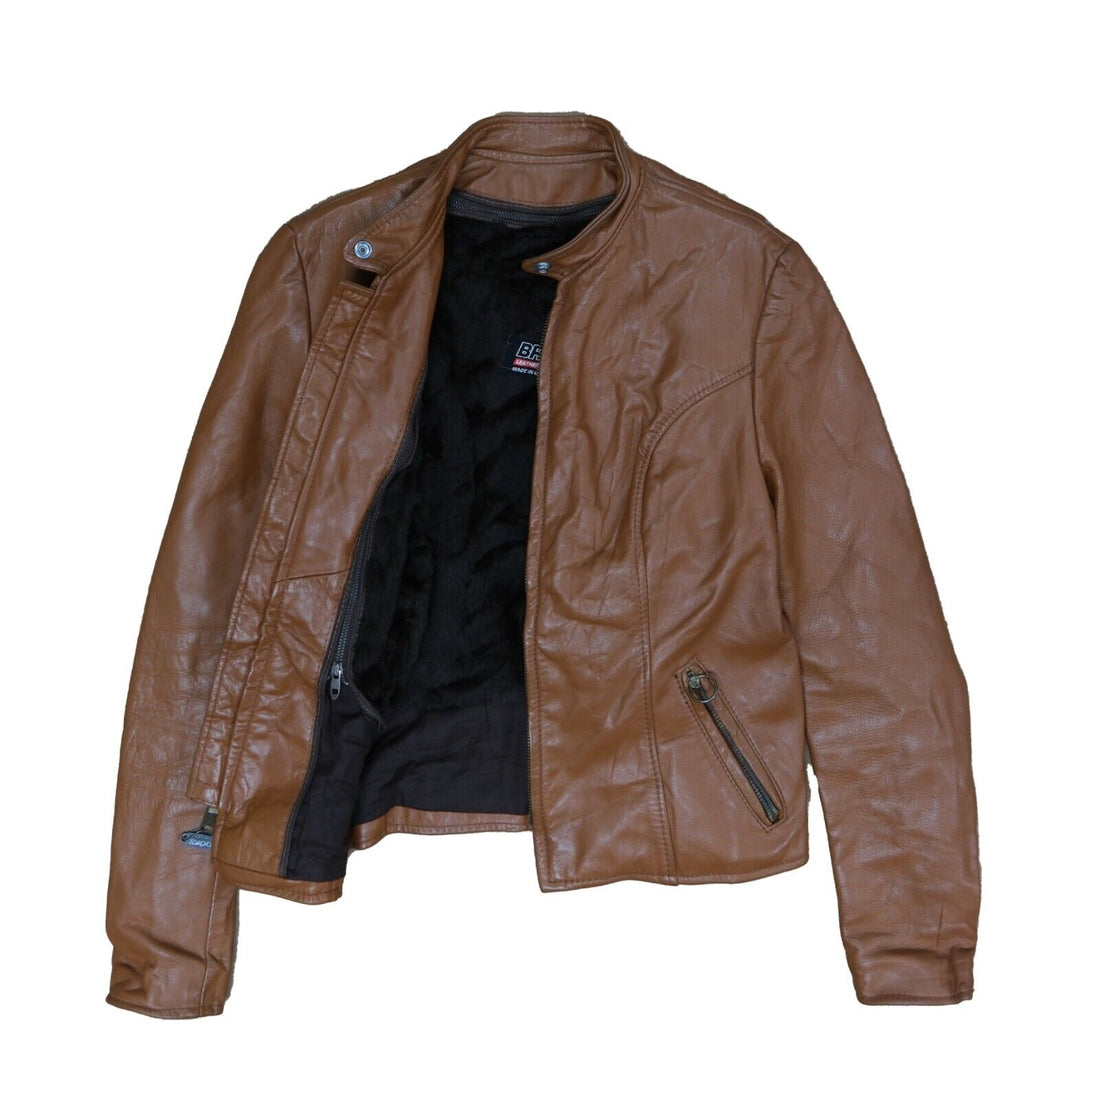 Vintage Brooks Leather Cafe Racer Motorcycle Jacket Size Medium Brown Lenzip Zip